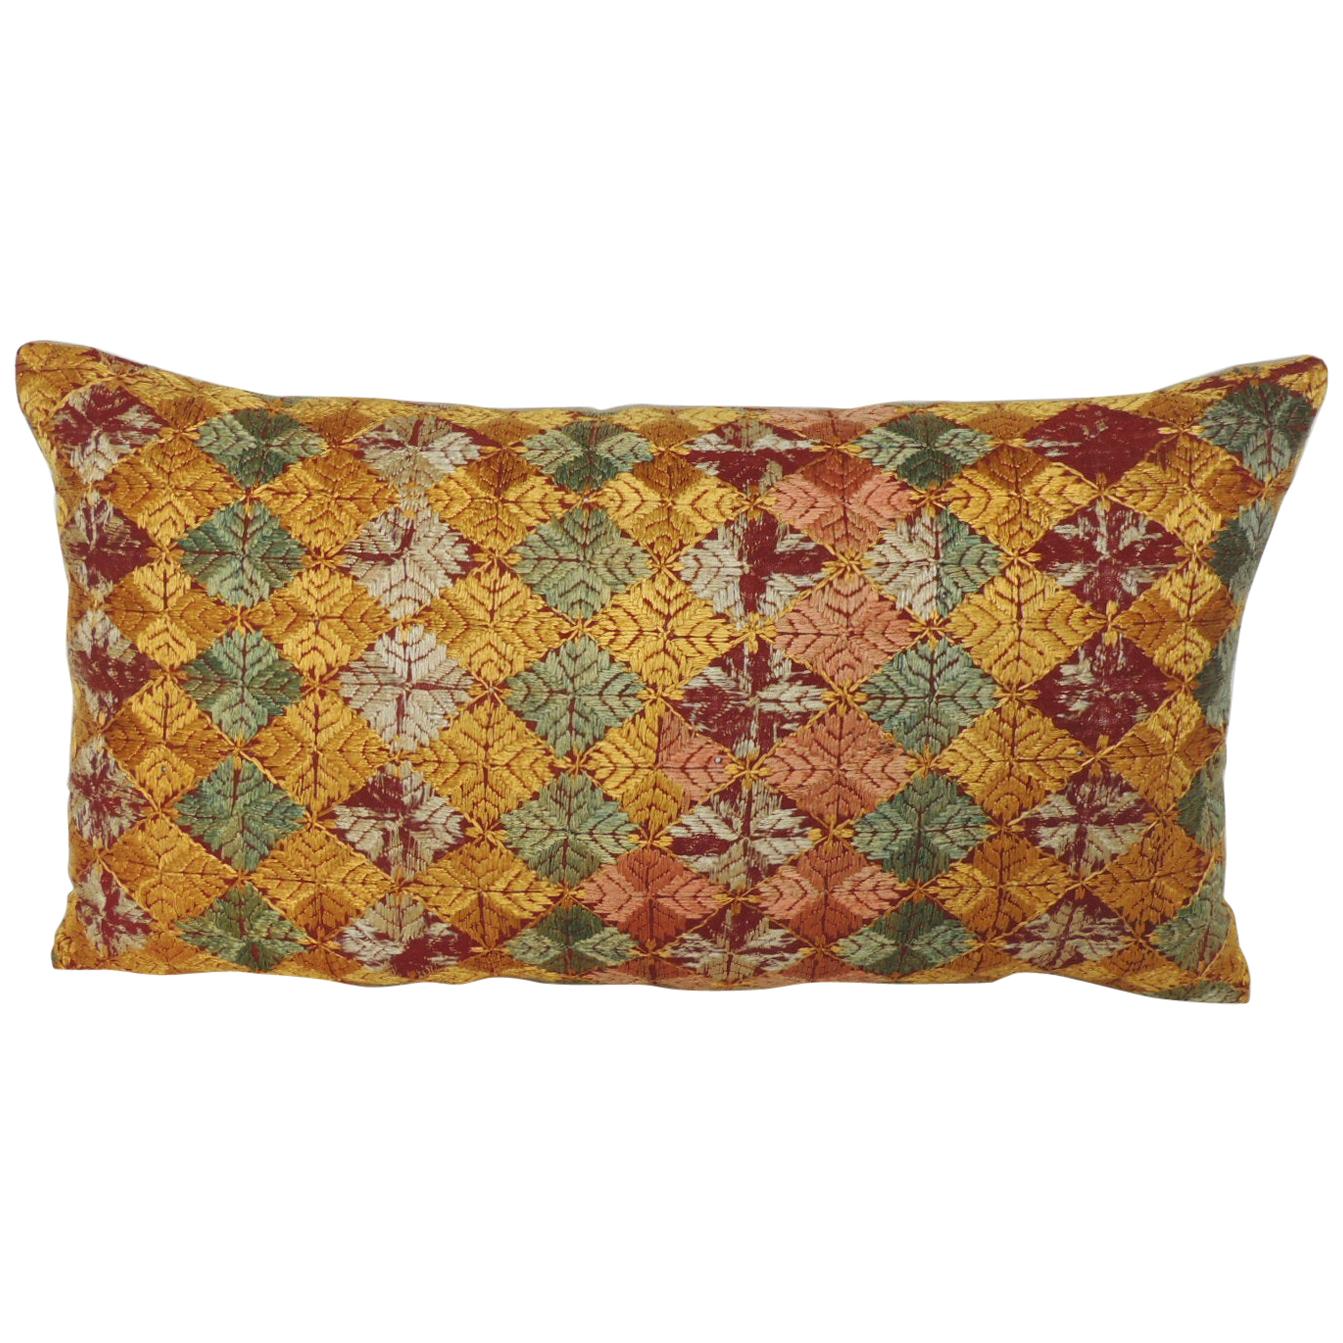 Woven Yellow and Green “Phulkari” Artisanal Decorative Bolster Pillow